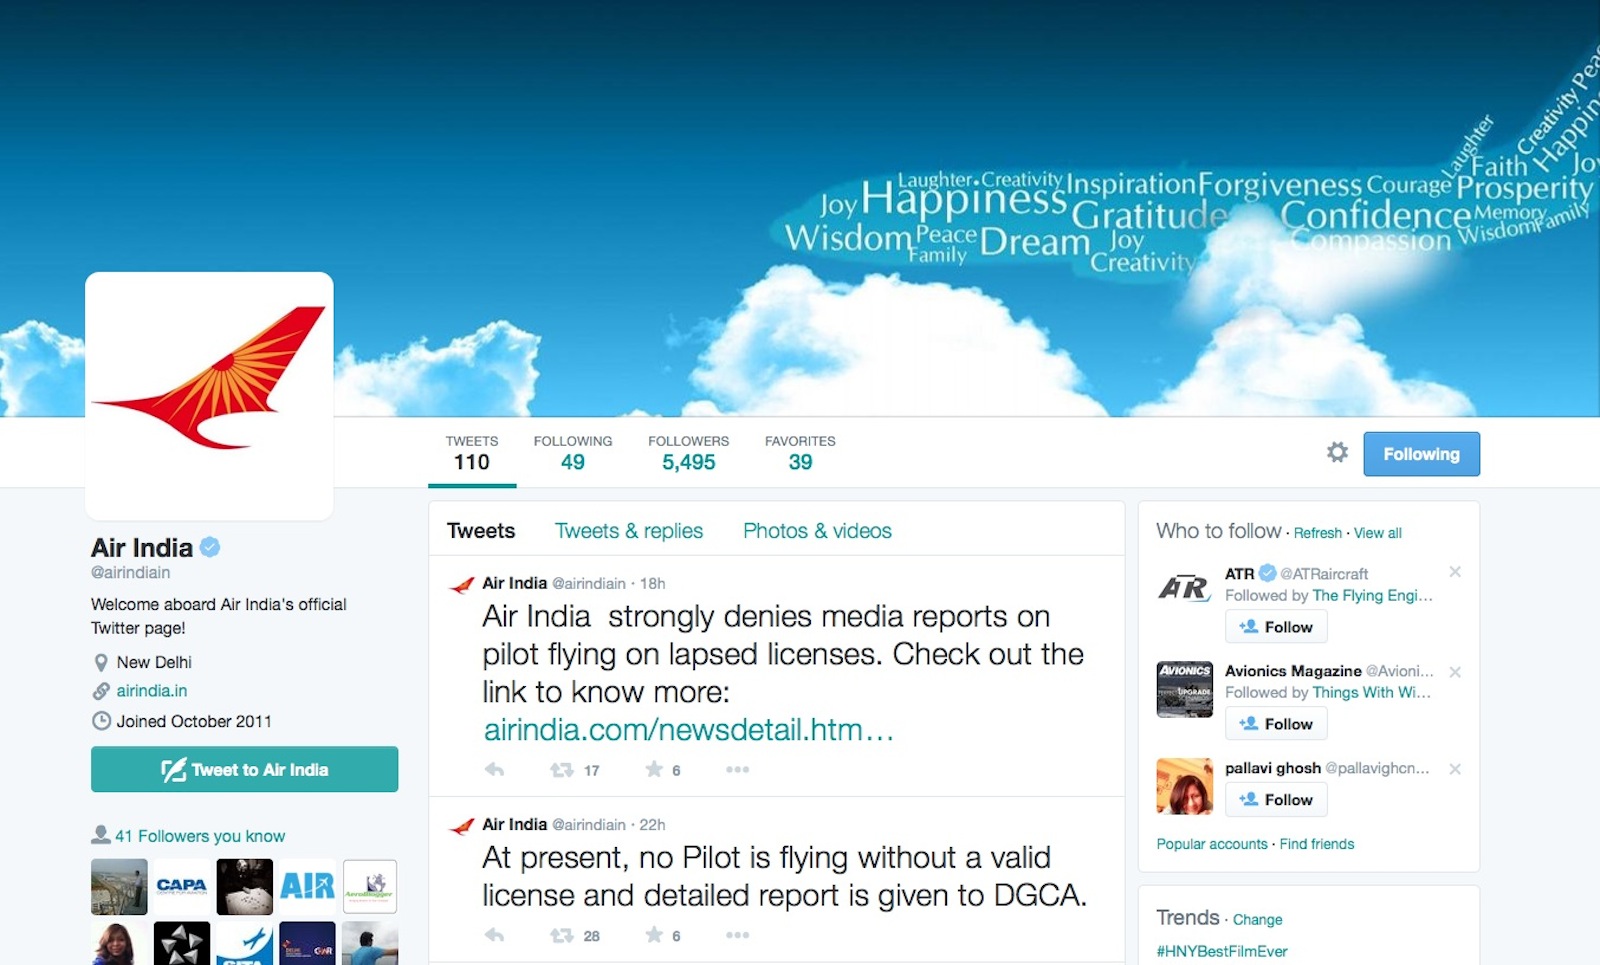 Welcome to Twitter, Air India @airindiain - Bangalore Aviation.